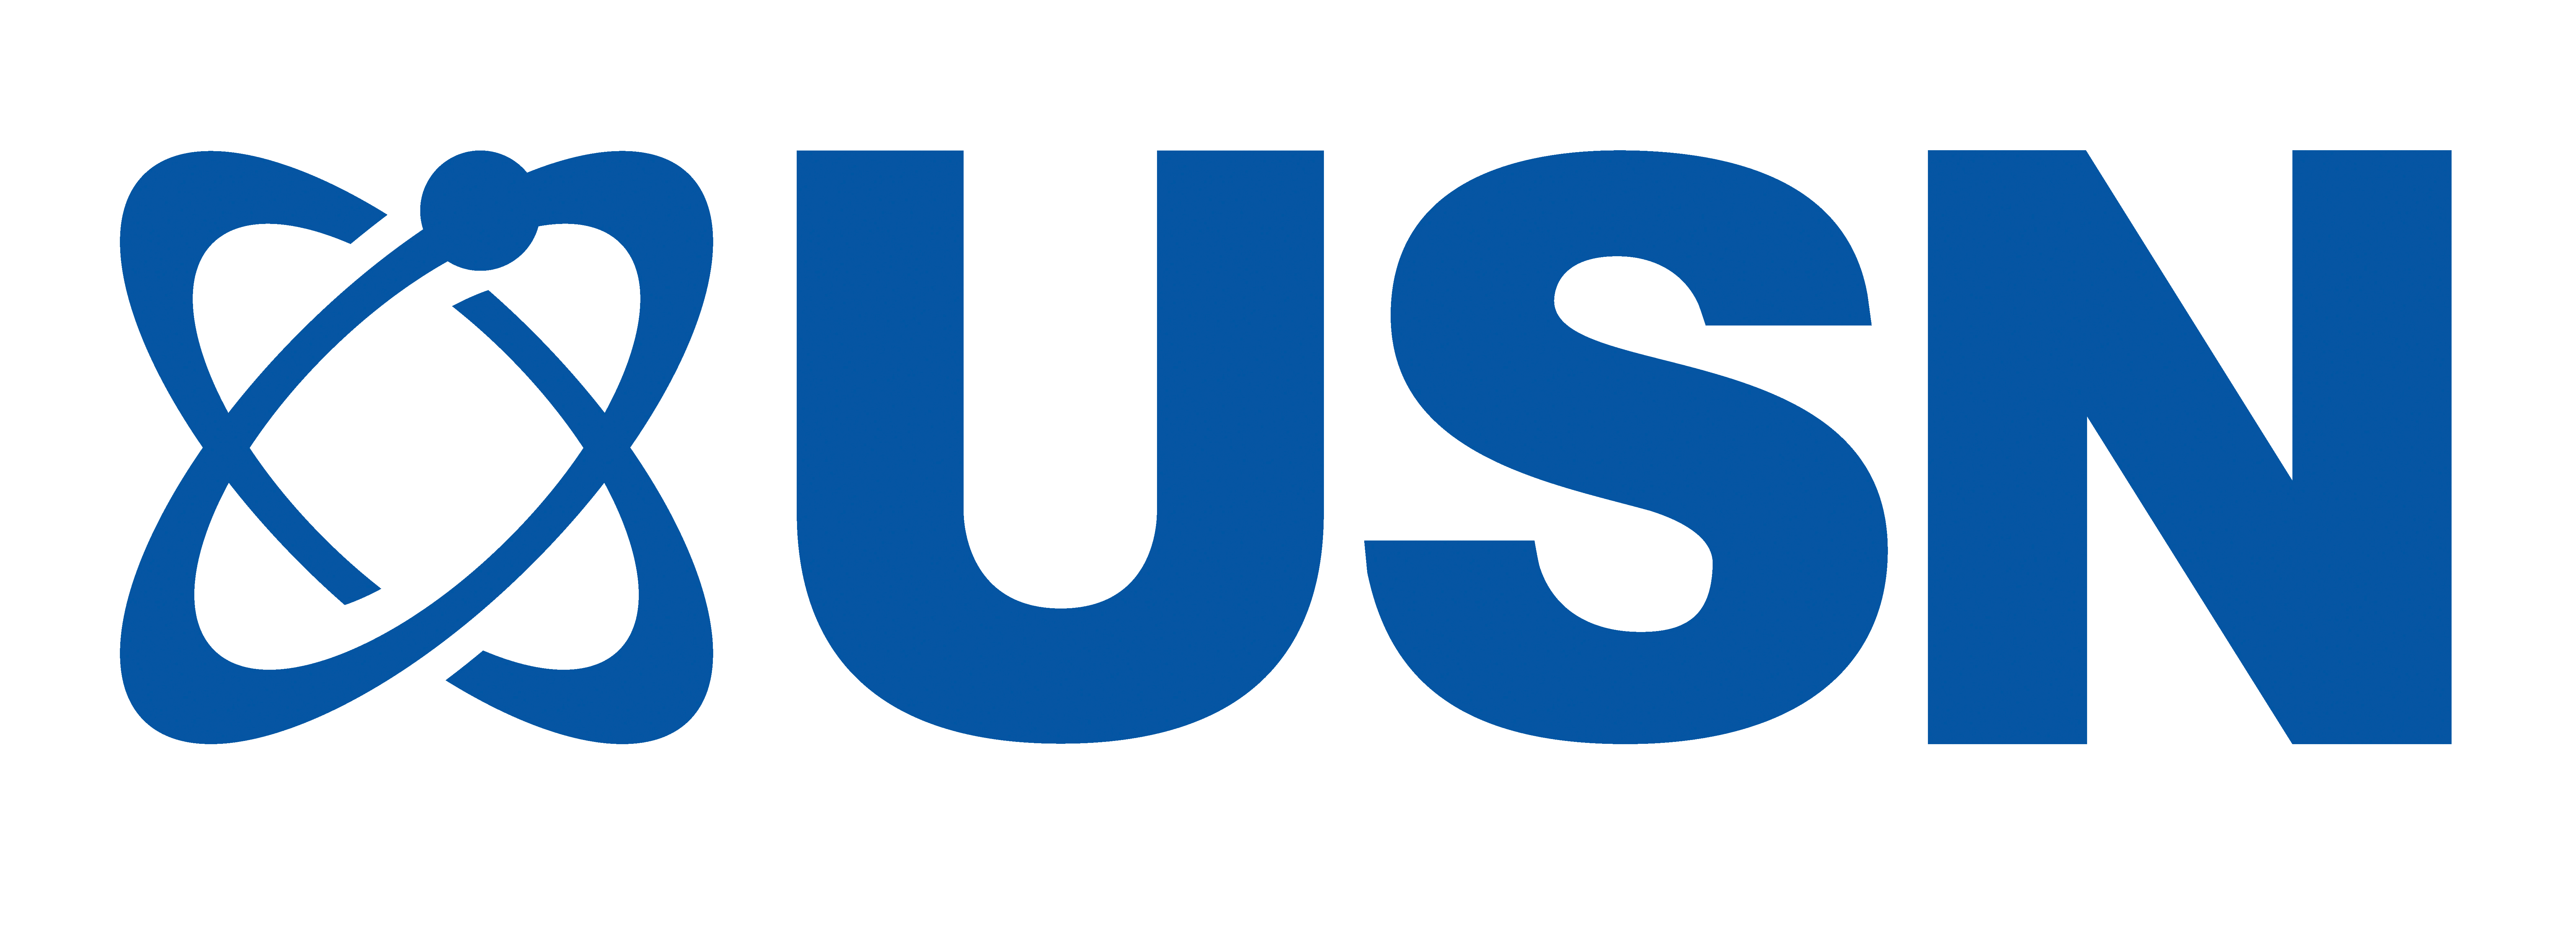 USN Logo - GYM 2018 usn logo - King Edward VII School